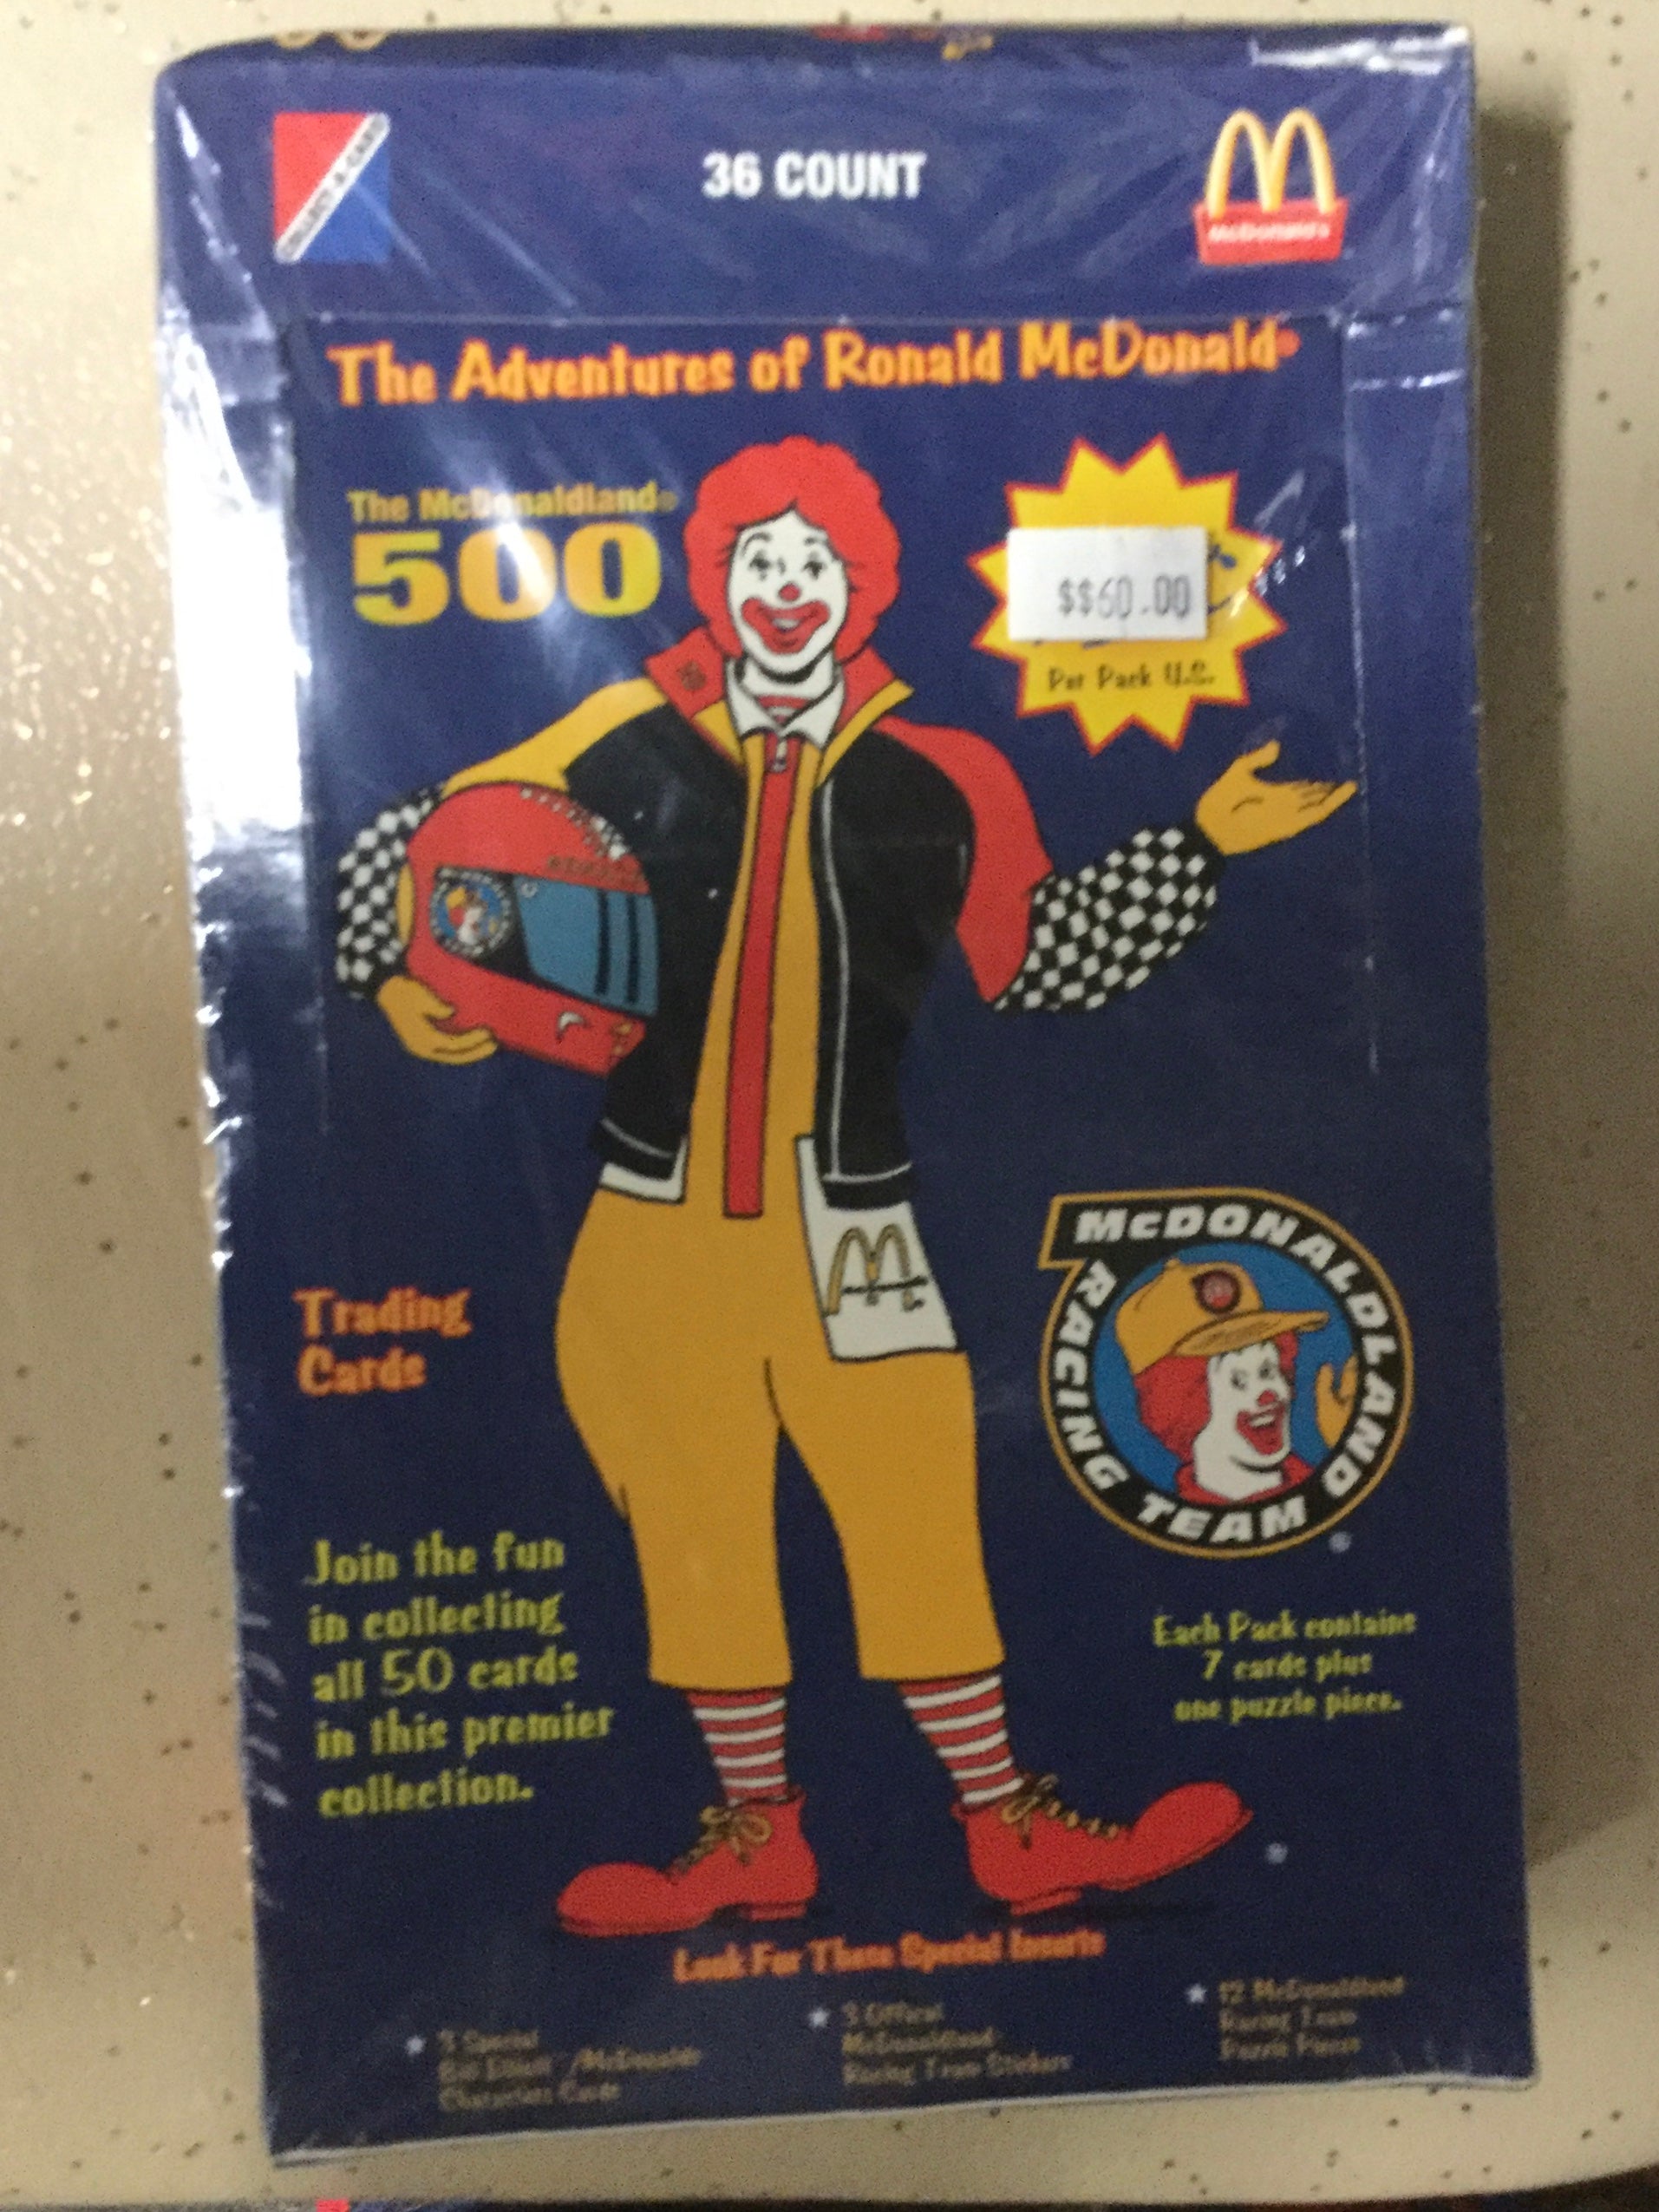 McDonald’s Ronald McDonald limited print cards 36 packs box